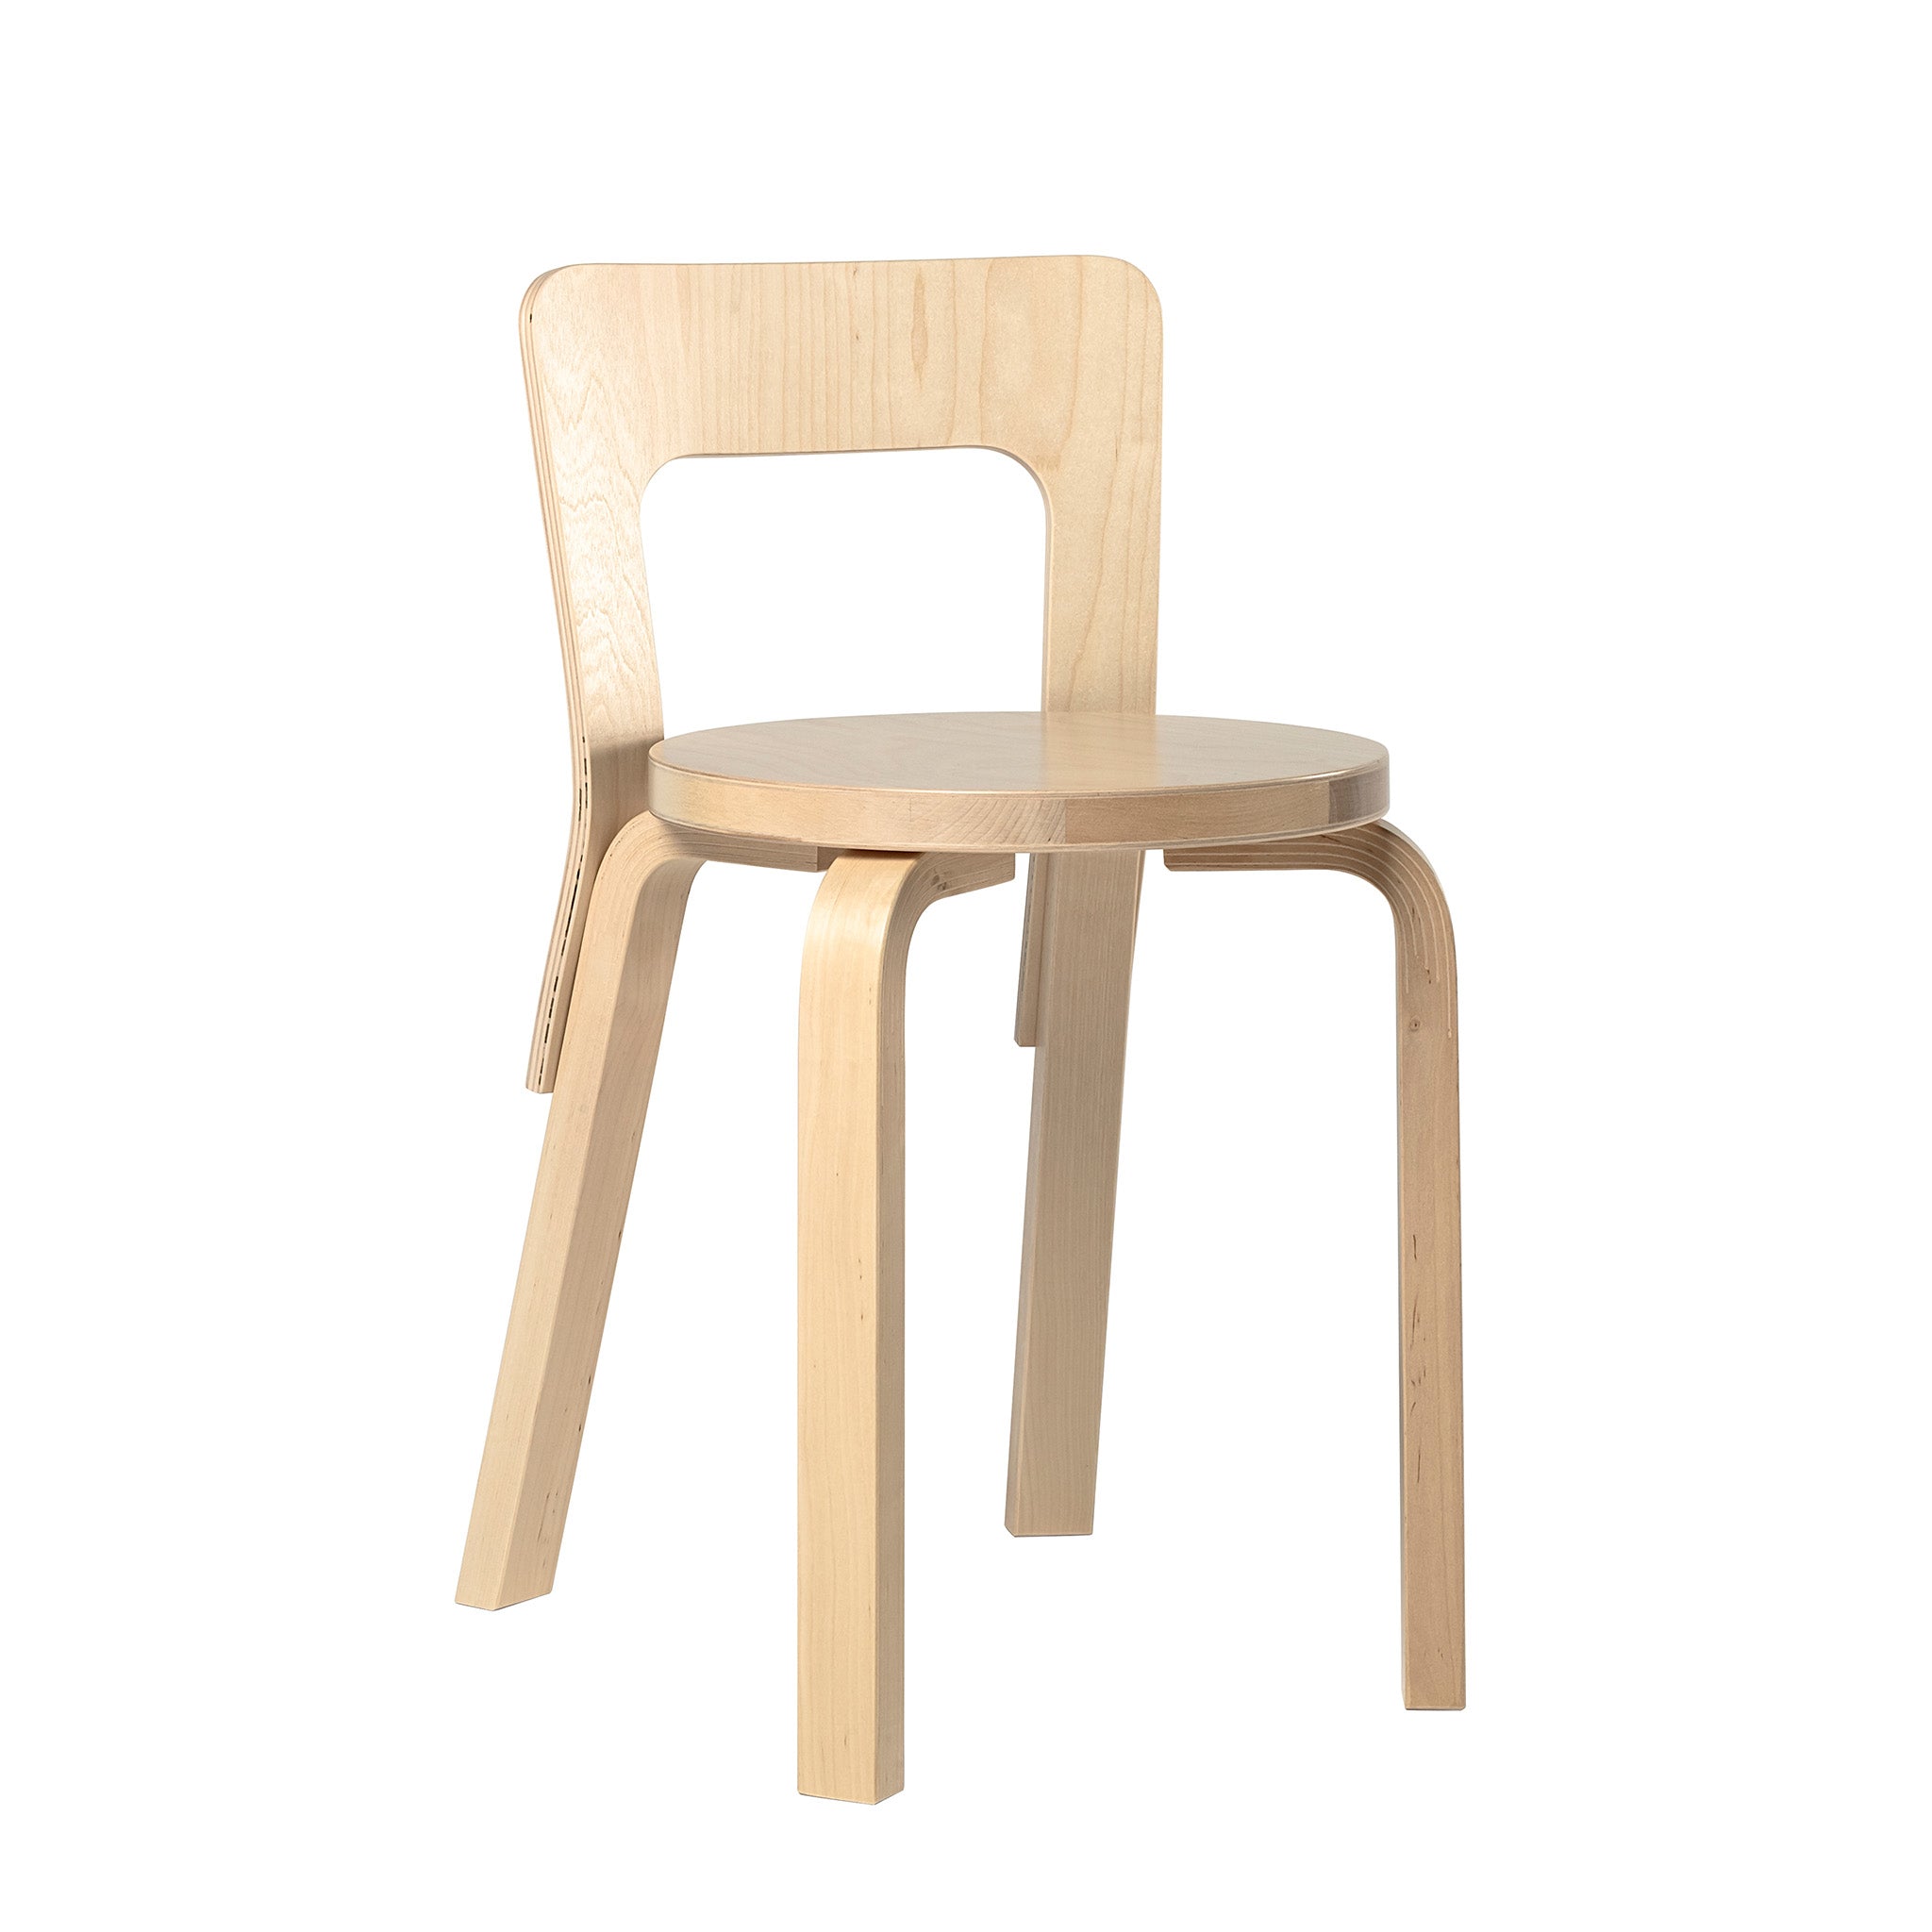 Chair 65 by Artek